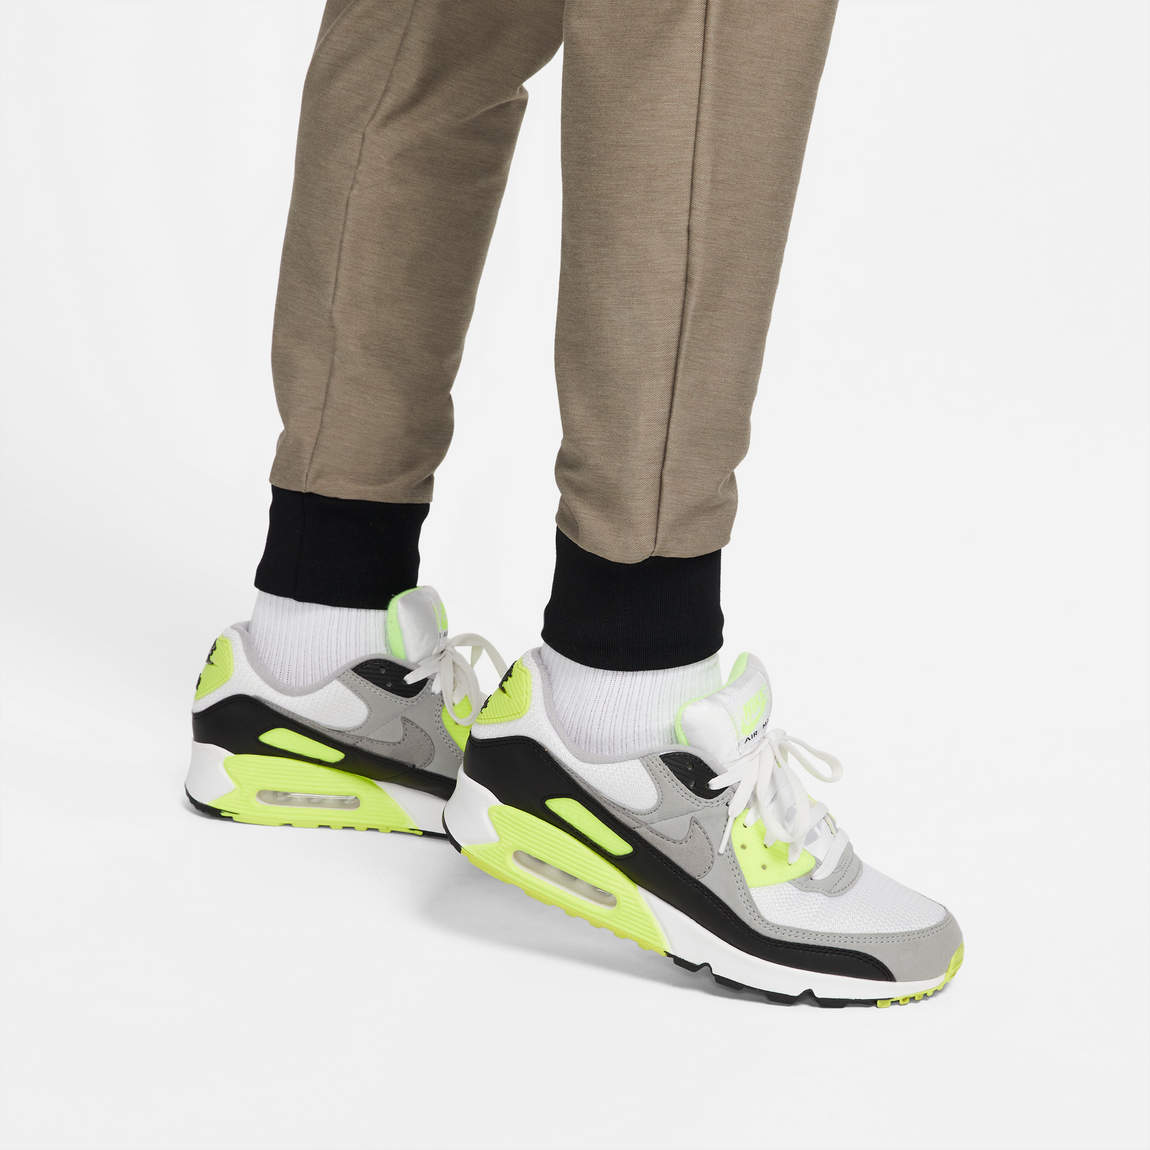 Nike Dri-FIT Tech Pack Men's Unlined Track Pant (Moon Fossil/Black) - Nike Dri-FIT Tech Pack Men's Unlined Track Pant (Moon Fossil/Black) - 